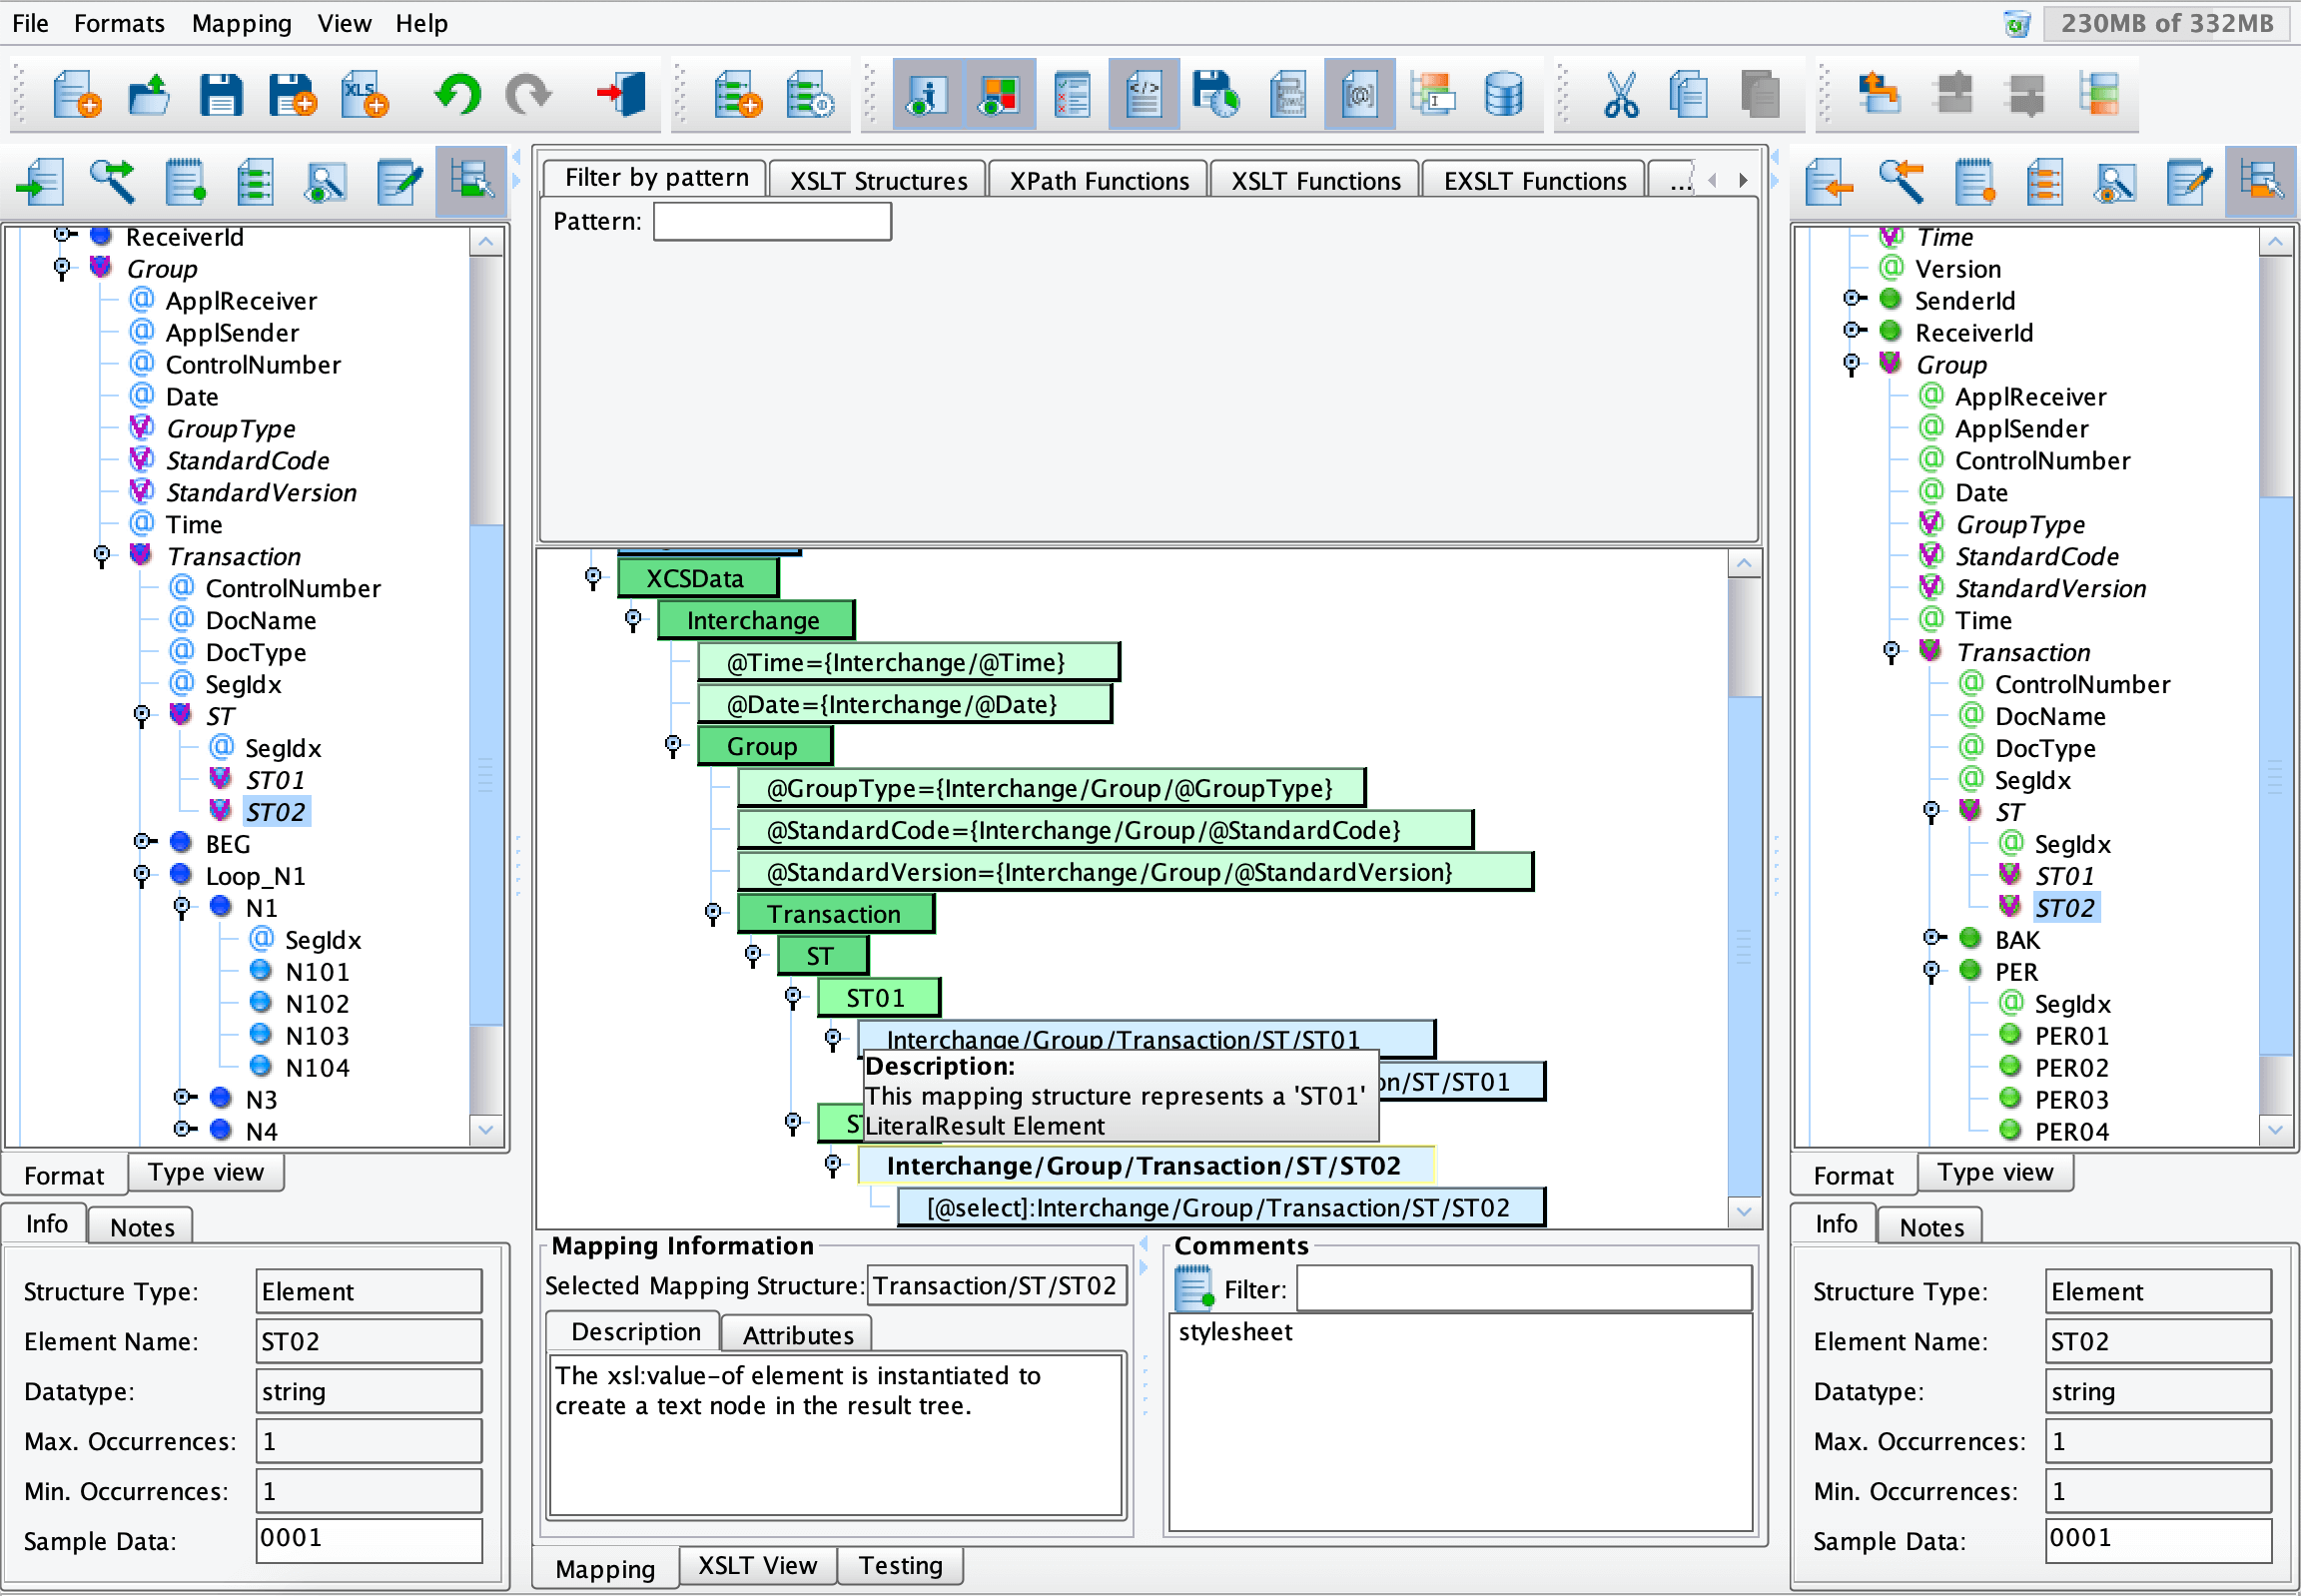 EDI X12 855 transaction example in PilotFish Data Mapper